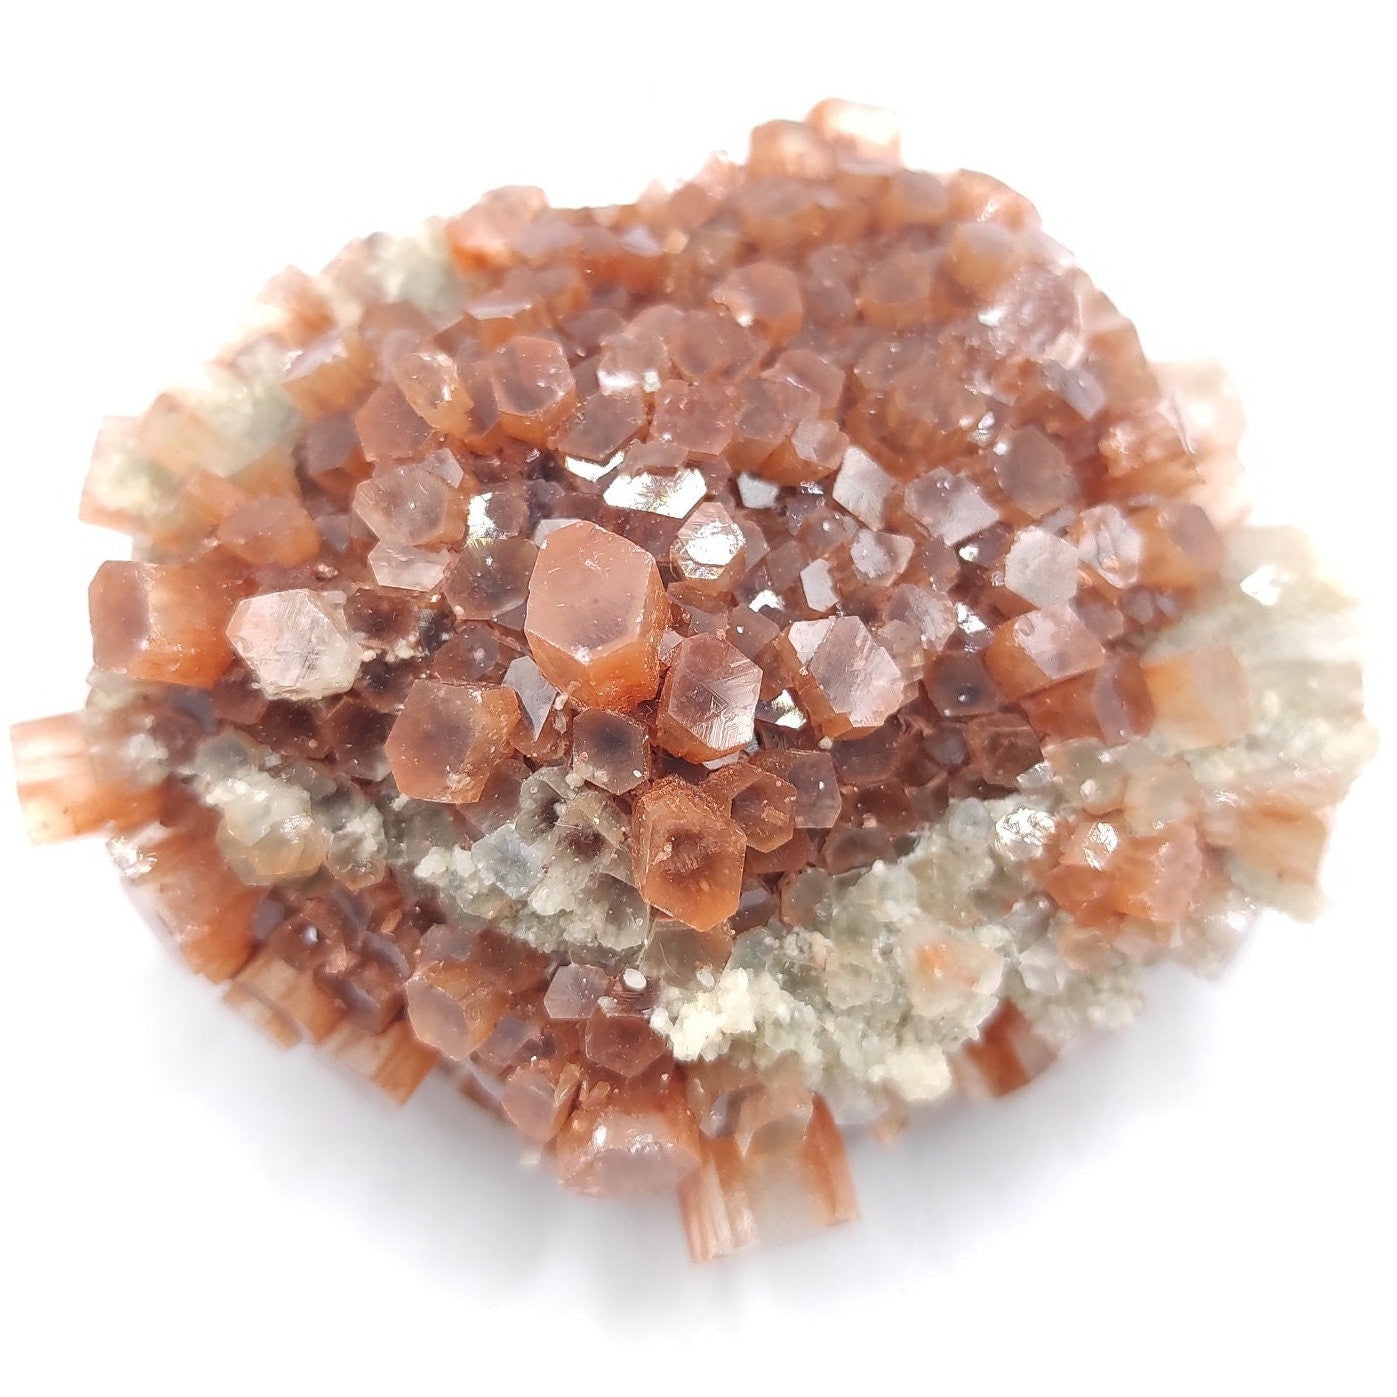 94g Aragonite Star Cluster - Orange Aragonite Crystal - Raw Mineral Specimen - Rough Aragonite from Tazouta, Fés-Méknes Region, Morocco